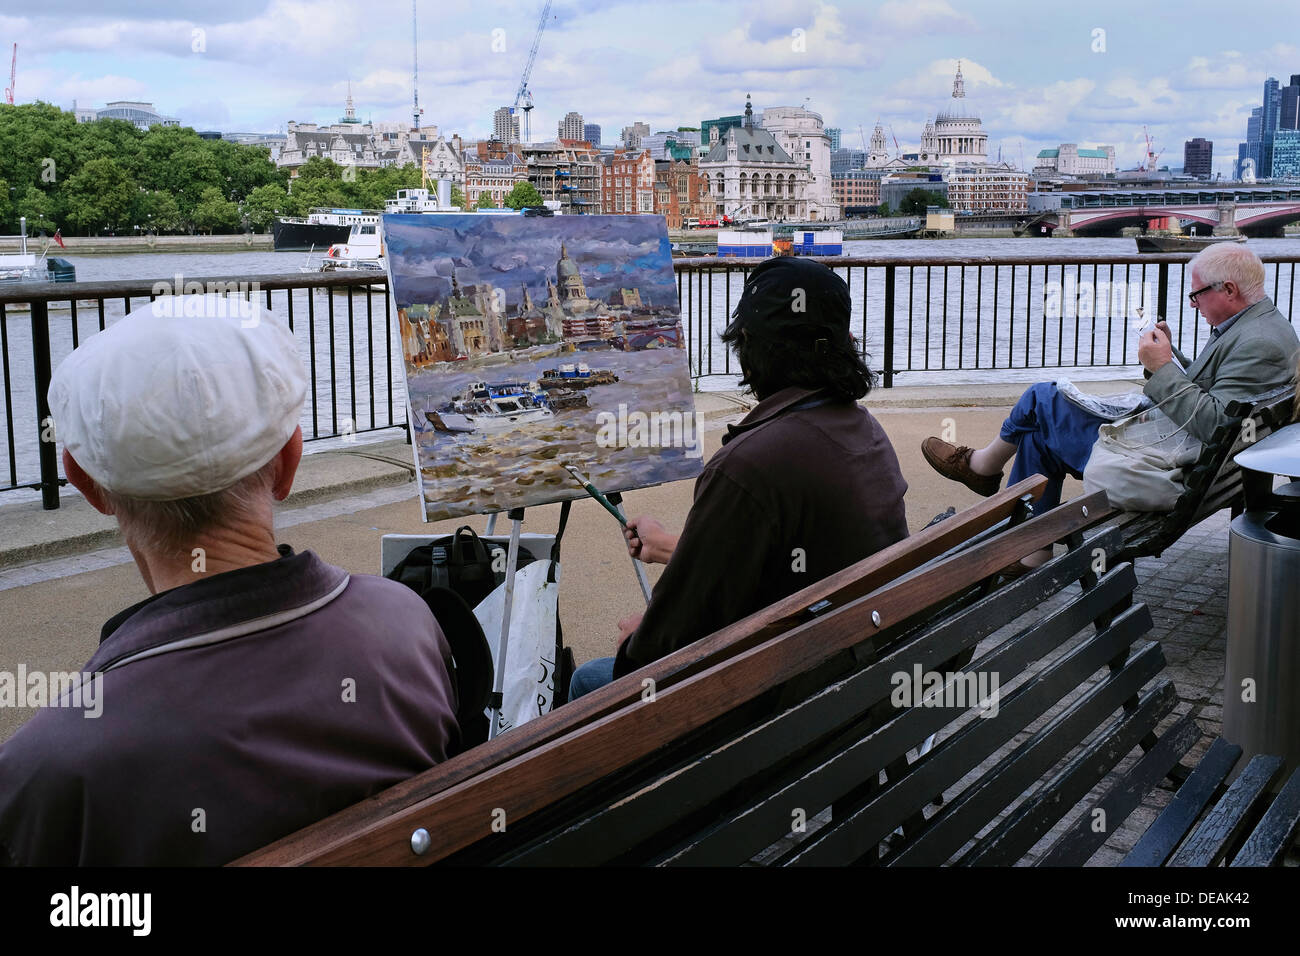 Artist painting River Thames scene, Southbank, London, UK Stock Photo